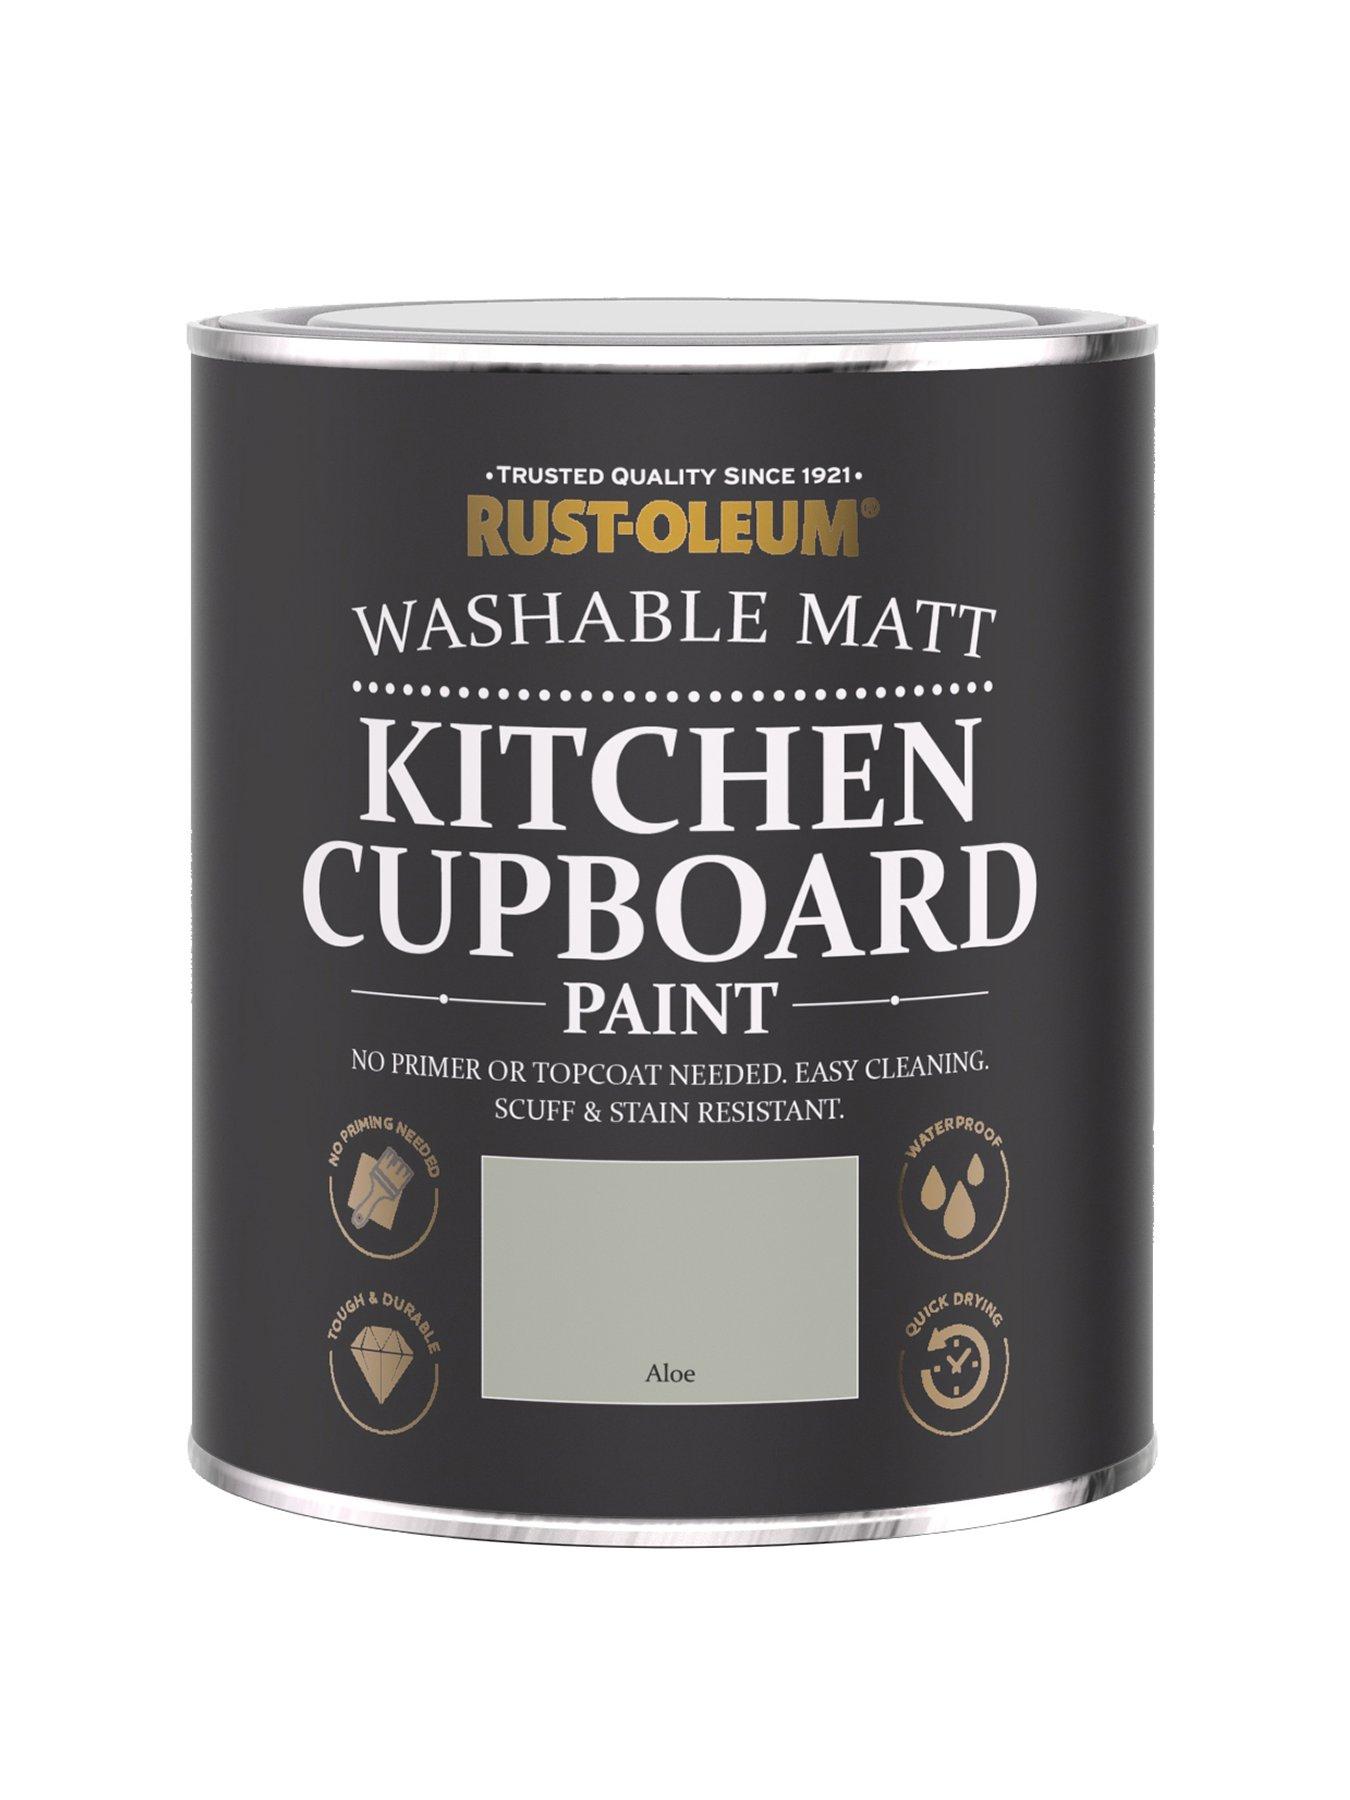 Product photograph of Rust-oleum Washable Matt Finish Kitchen Cupboard Paint Ndash Aloe from very.co.uk